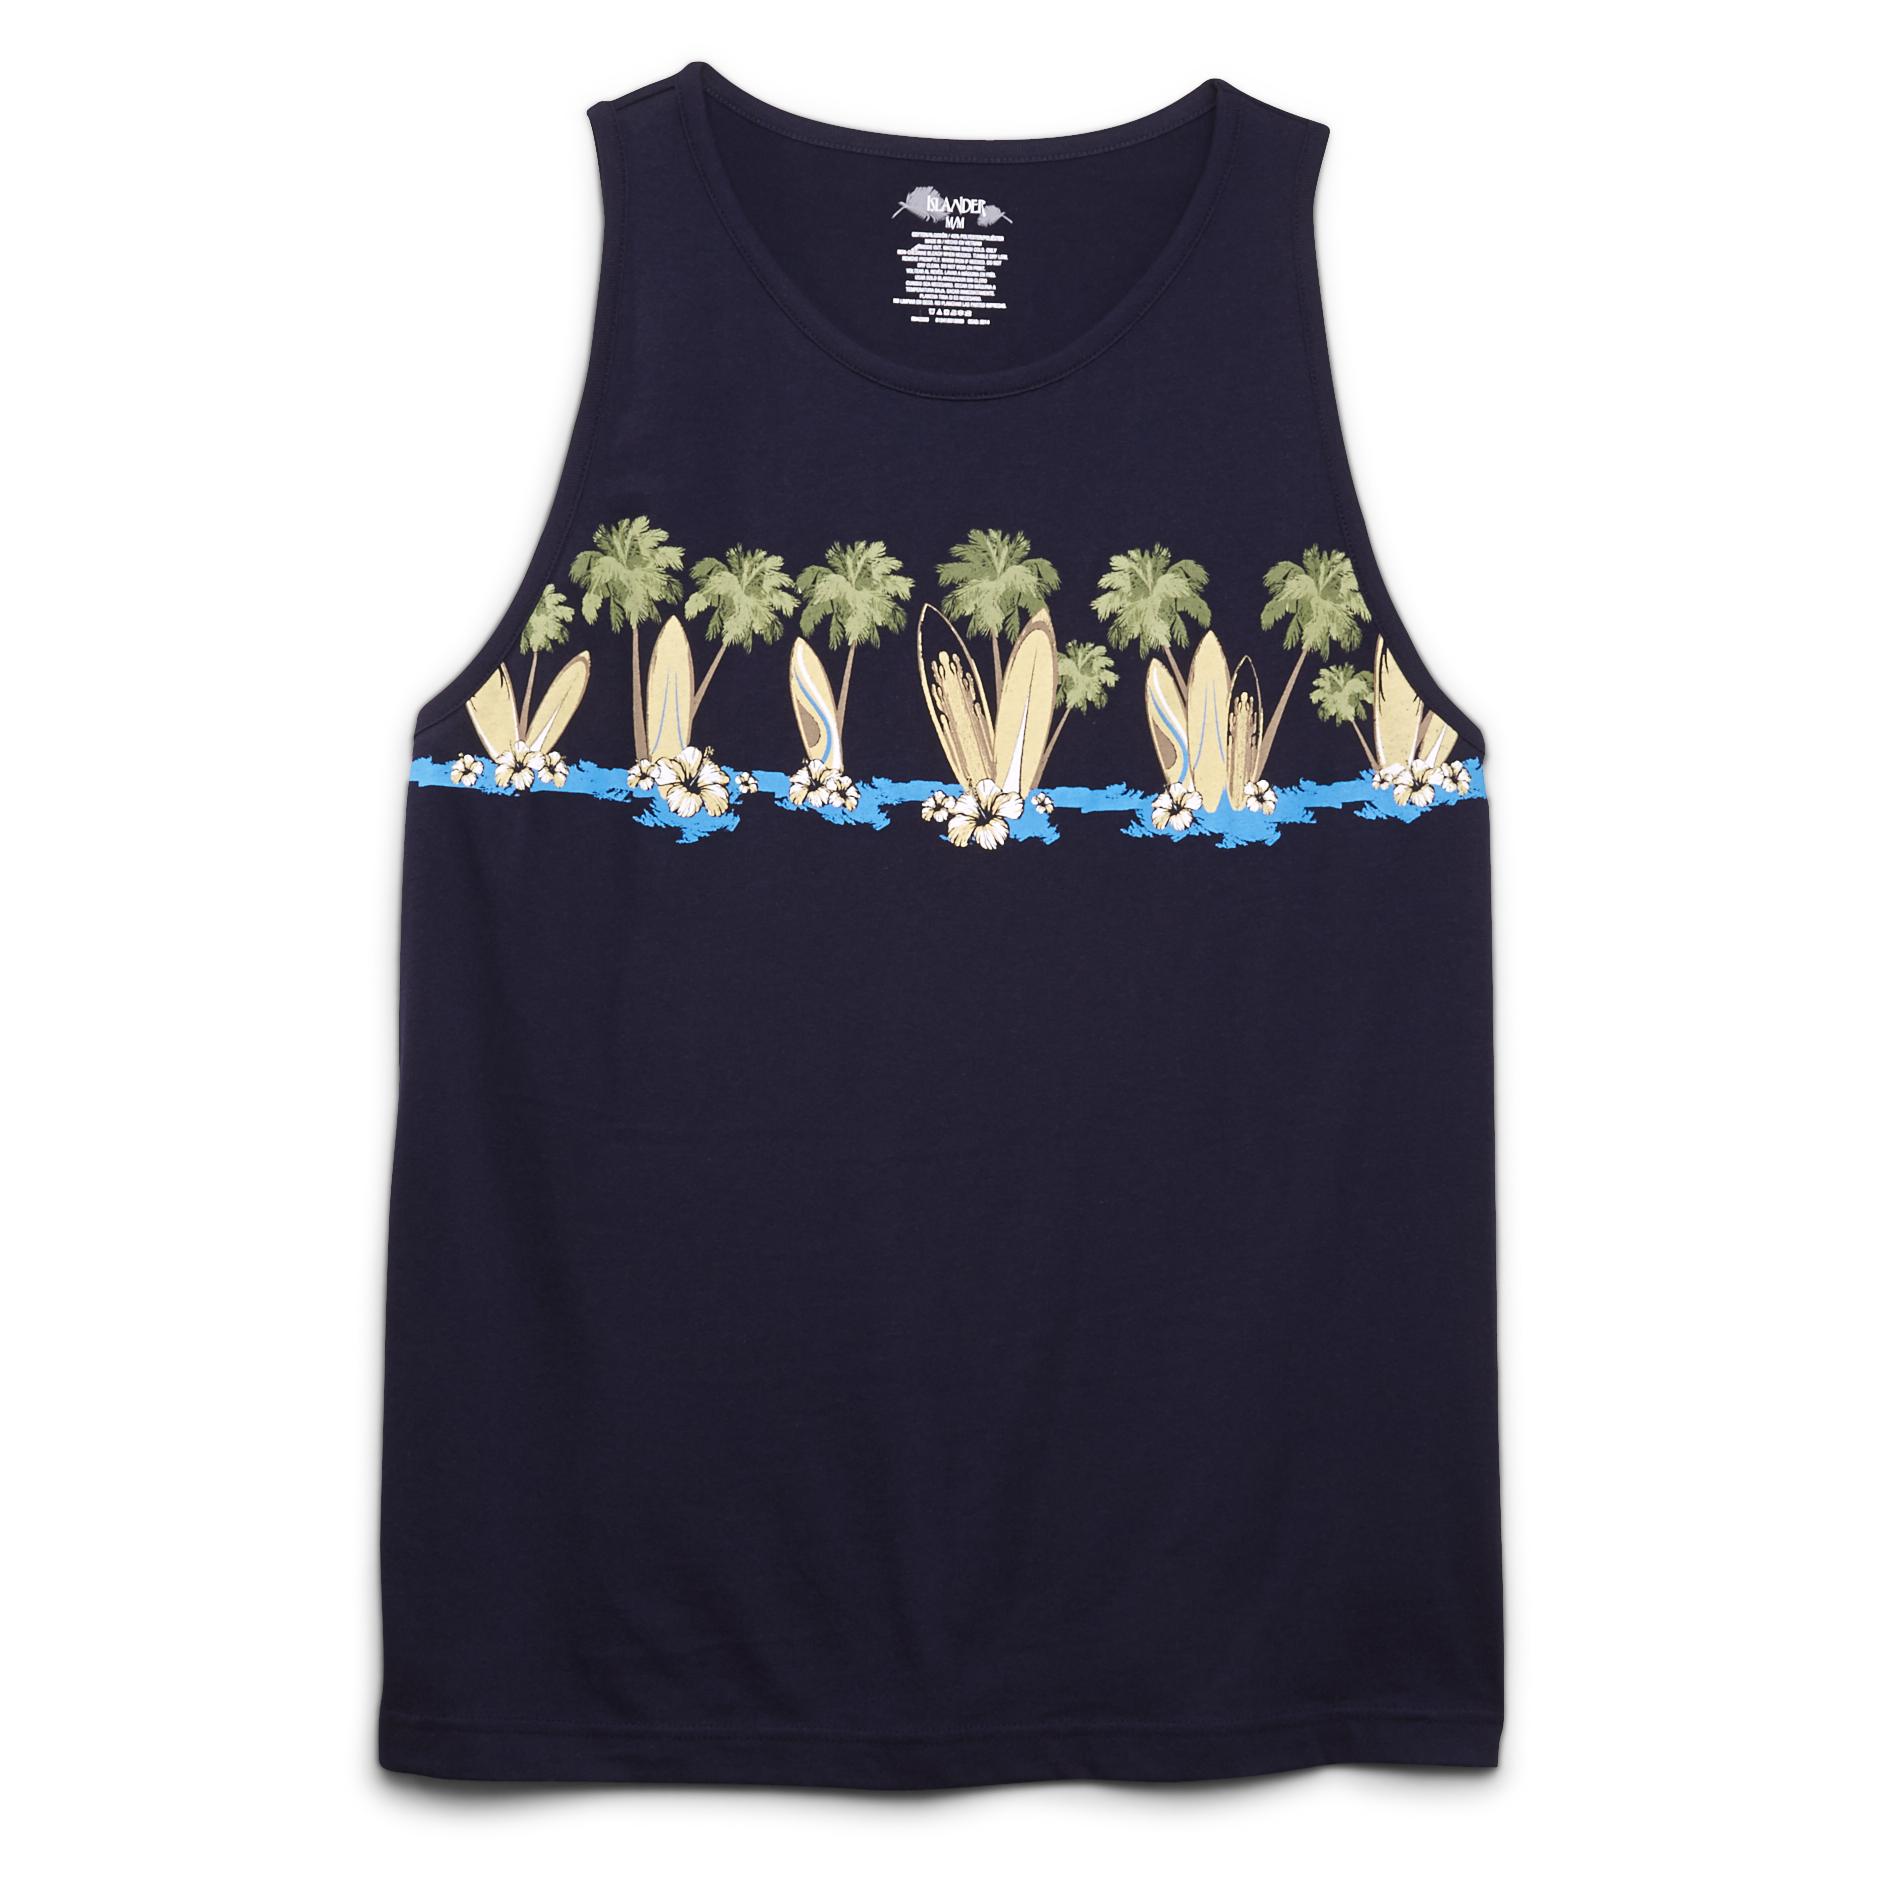 Islander Men's Sleeveless Graphic T-Shirt - Surfboards